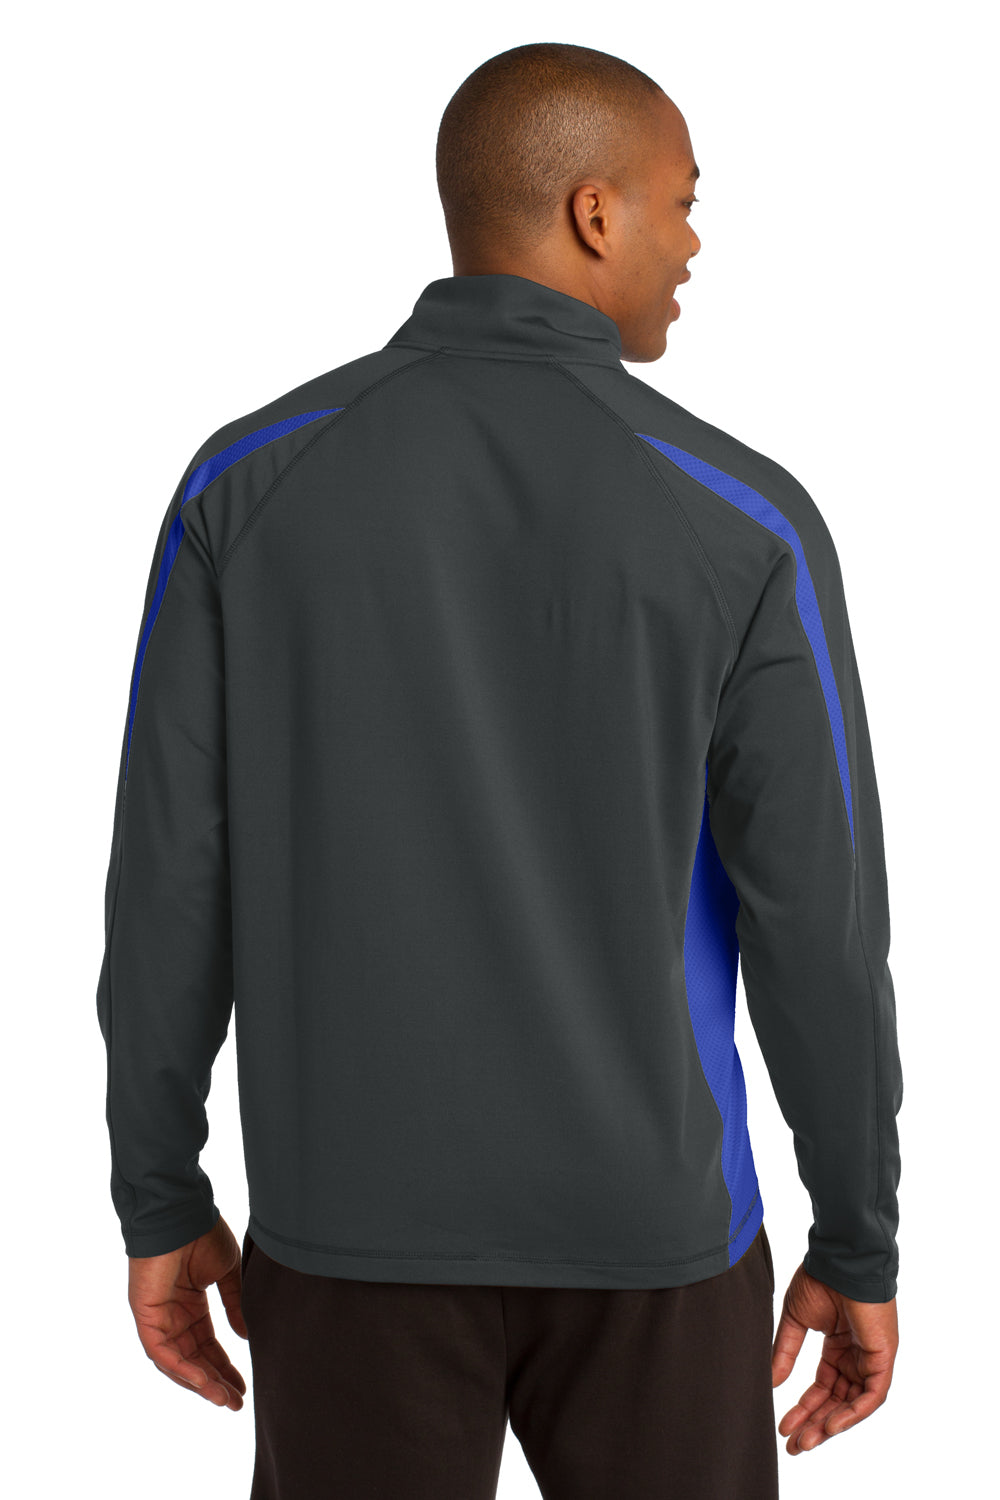 Sport-Tek ST851 Mens Sport-Wick Moisture Wicking 1/4 Zip Sweatshirt Charcoal Grey/Royal Blue Back